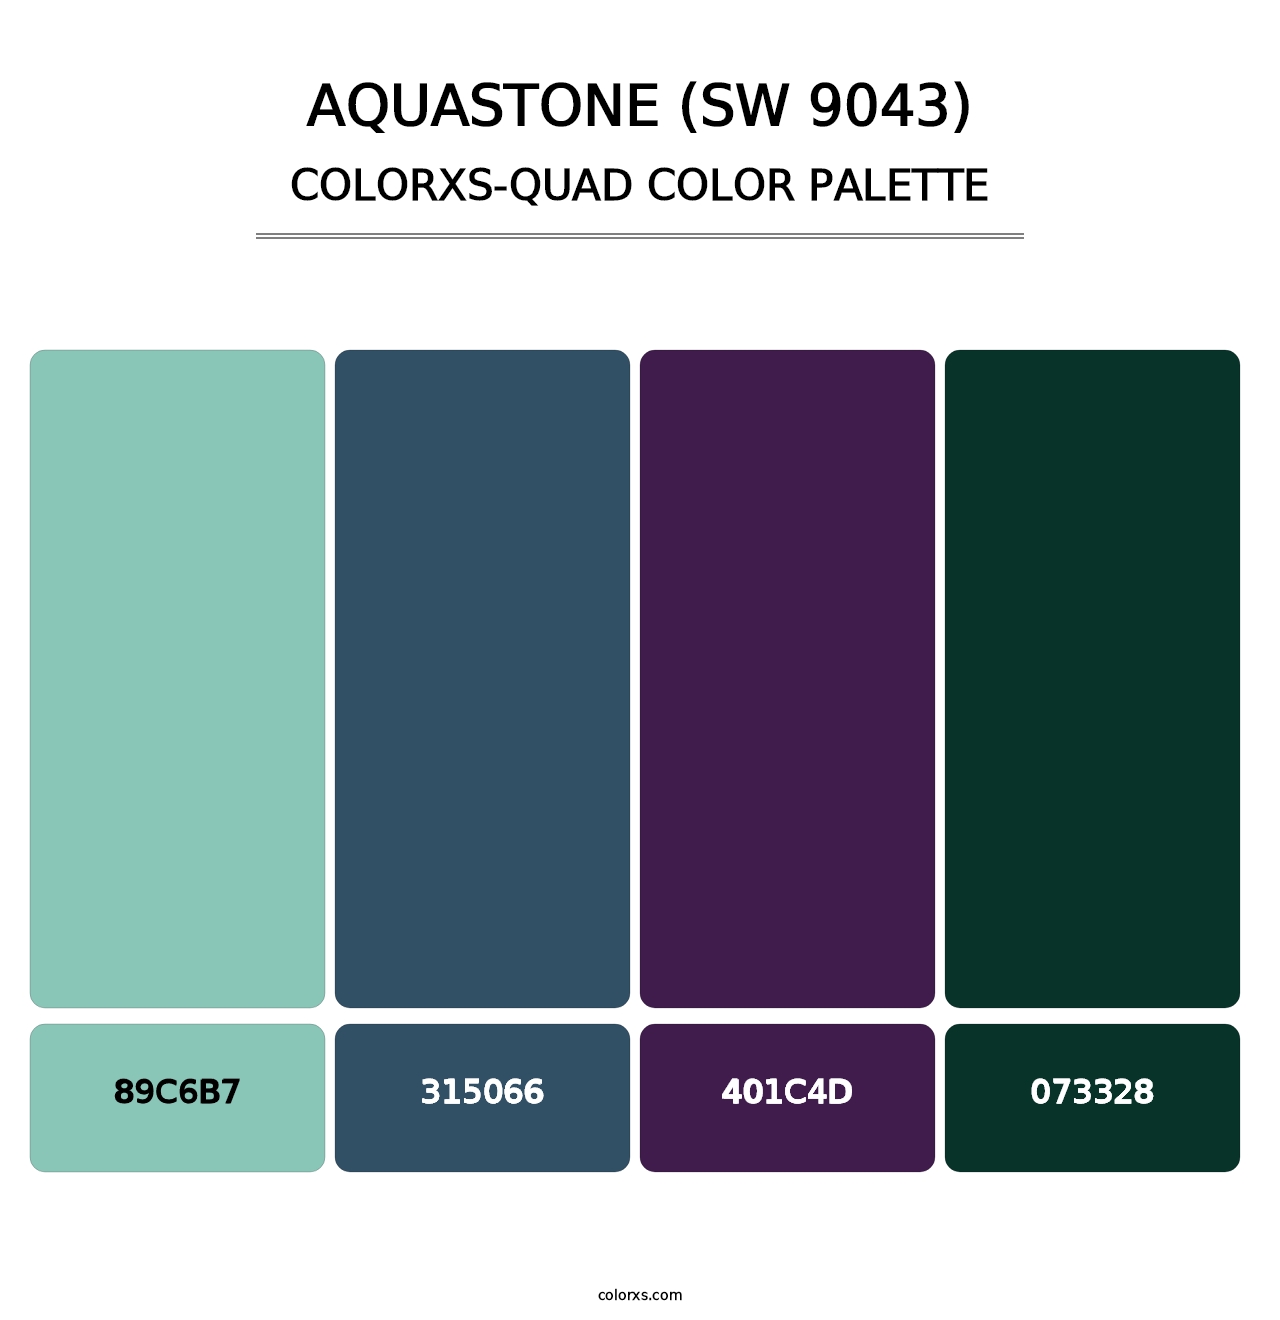 Aquastone (SW 9043) - Colorxs Quad Palette